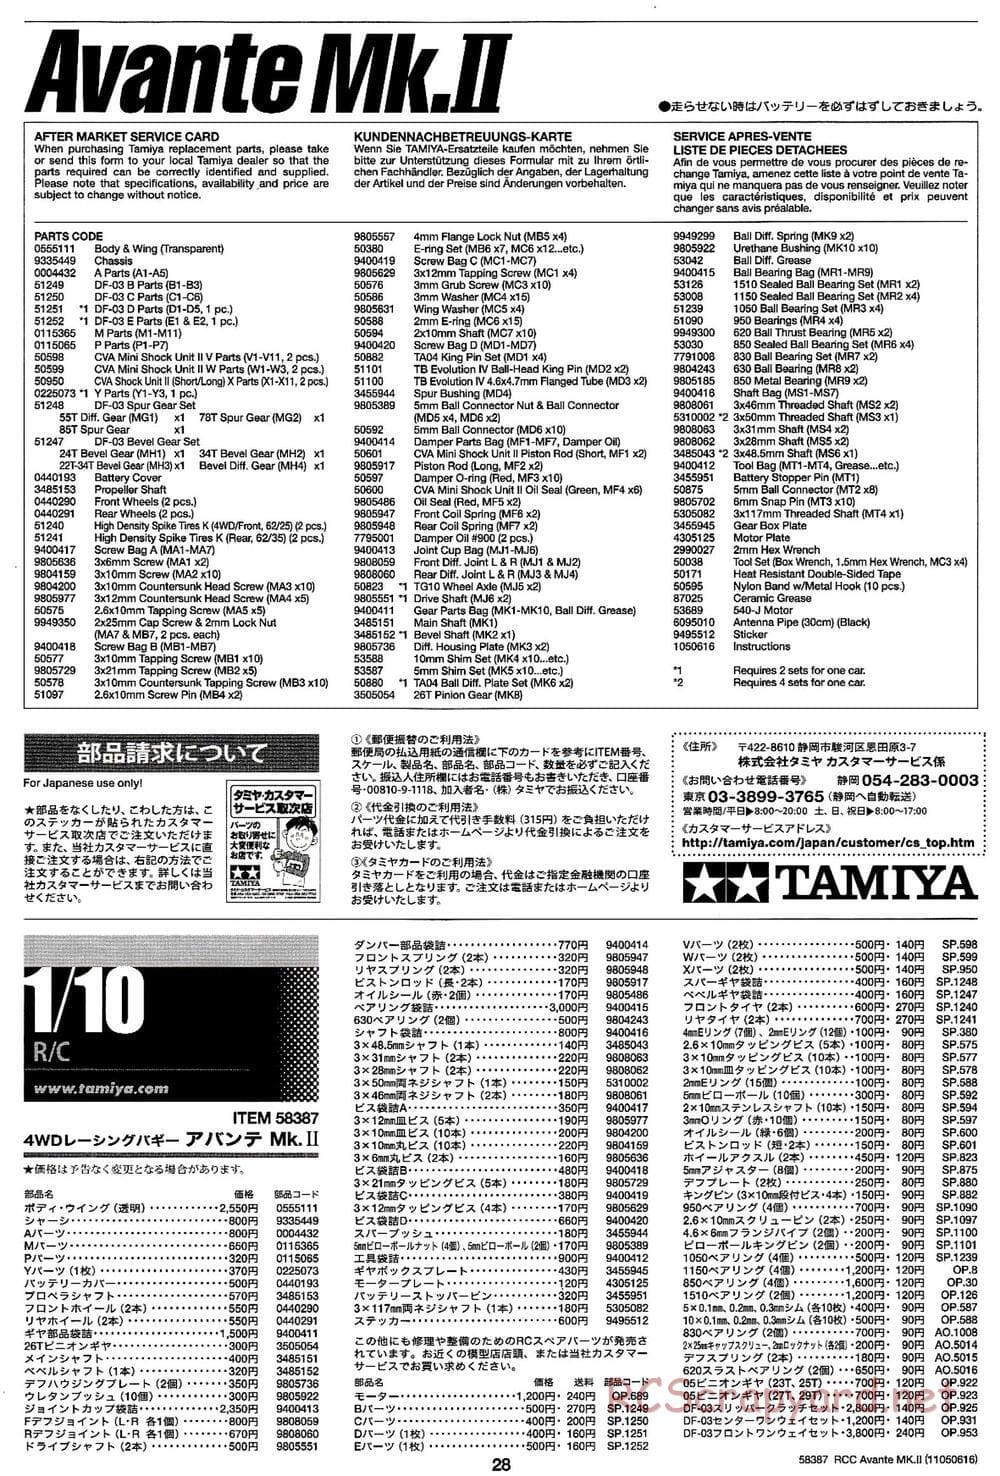 Tamiya - Avante Mk.II Chassis - Manual - Page 28